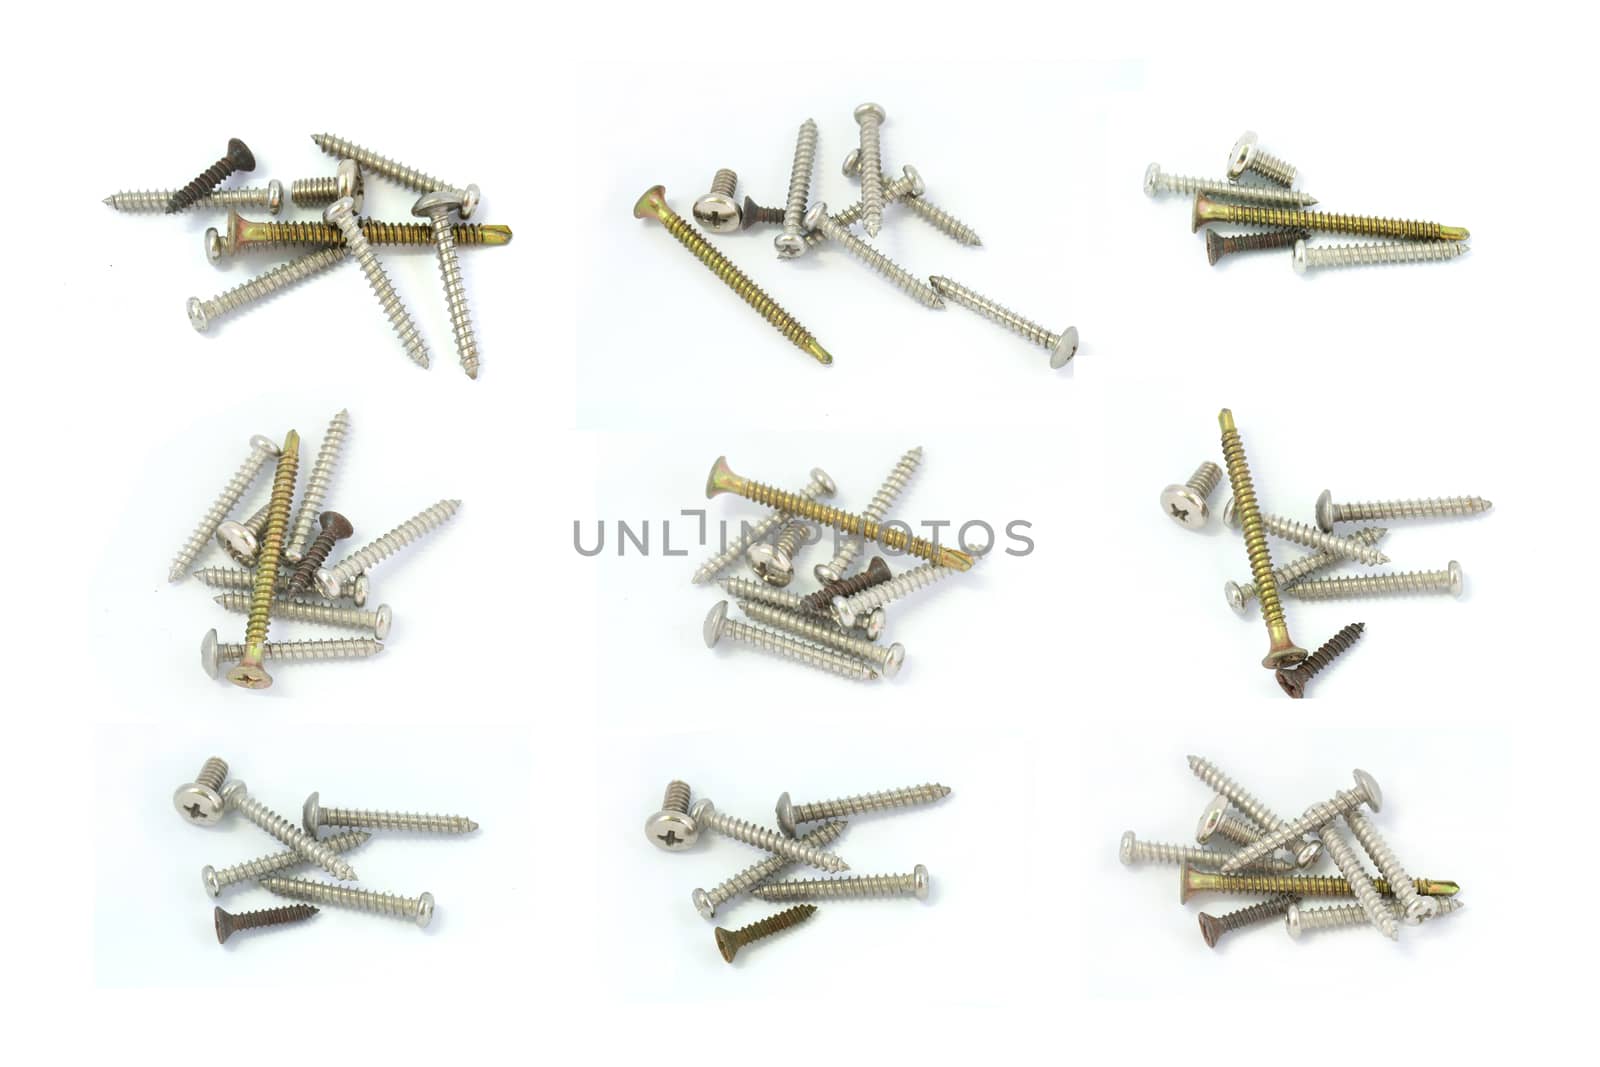 Six shots of many screws by kanokwan14002